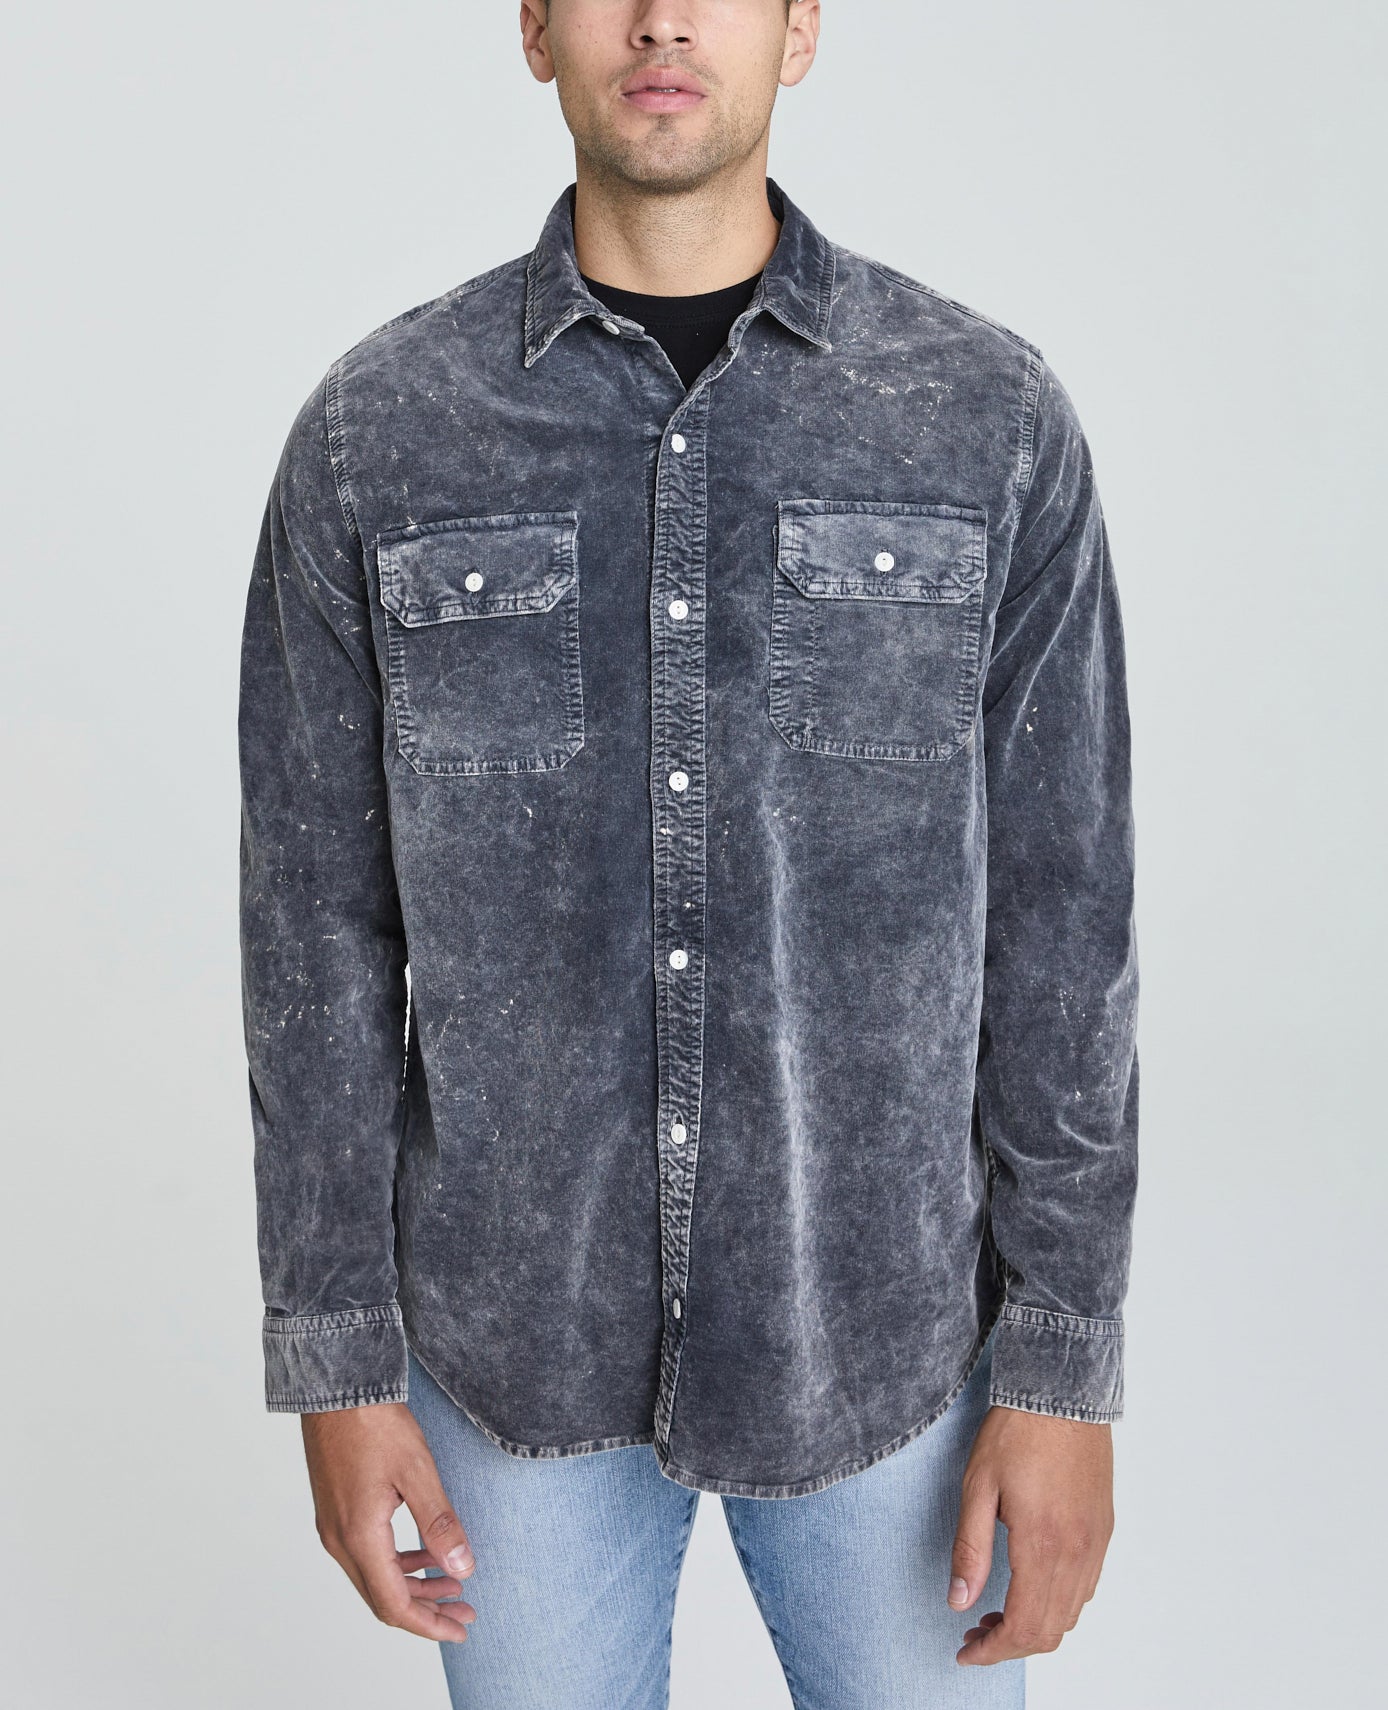 Benning Utility Shirt Atomized Charcoal Velvet Corduroy Men Tops Photo 1